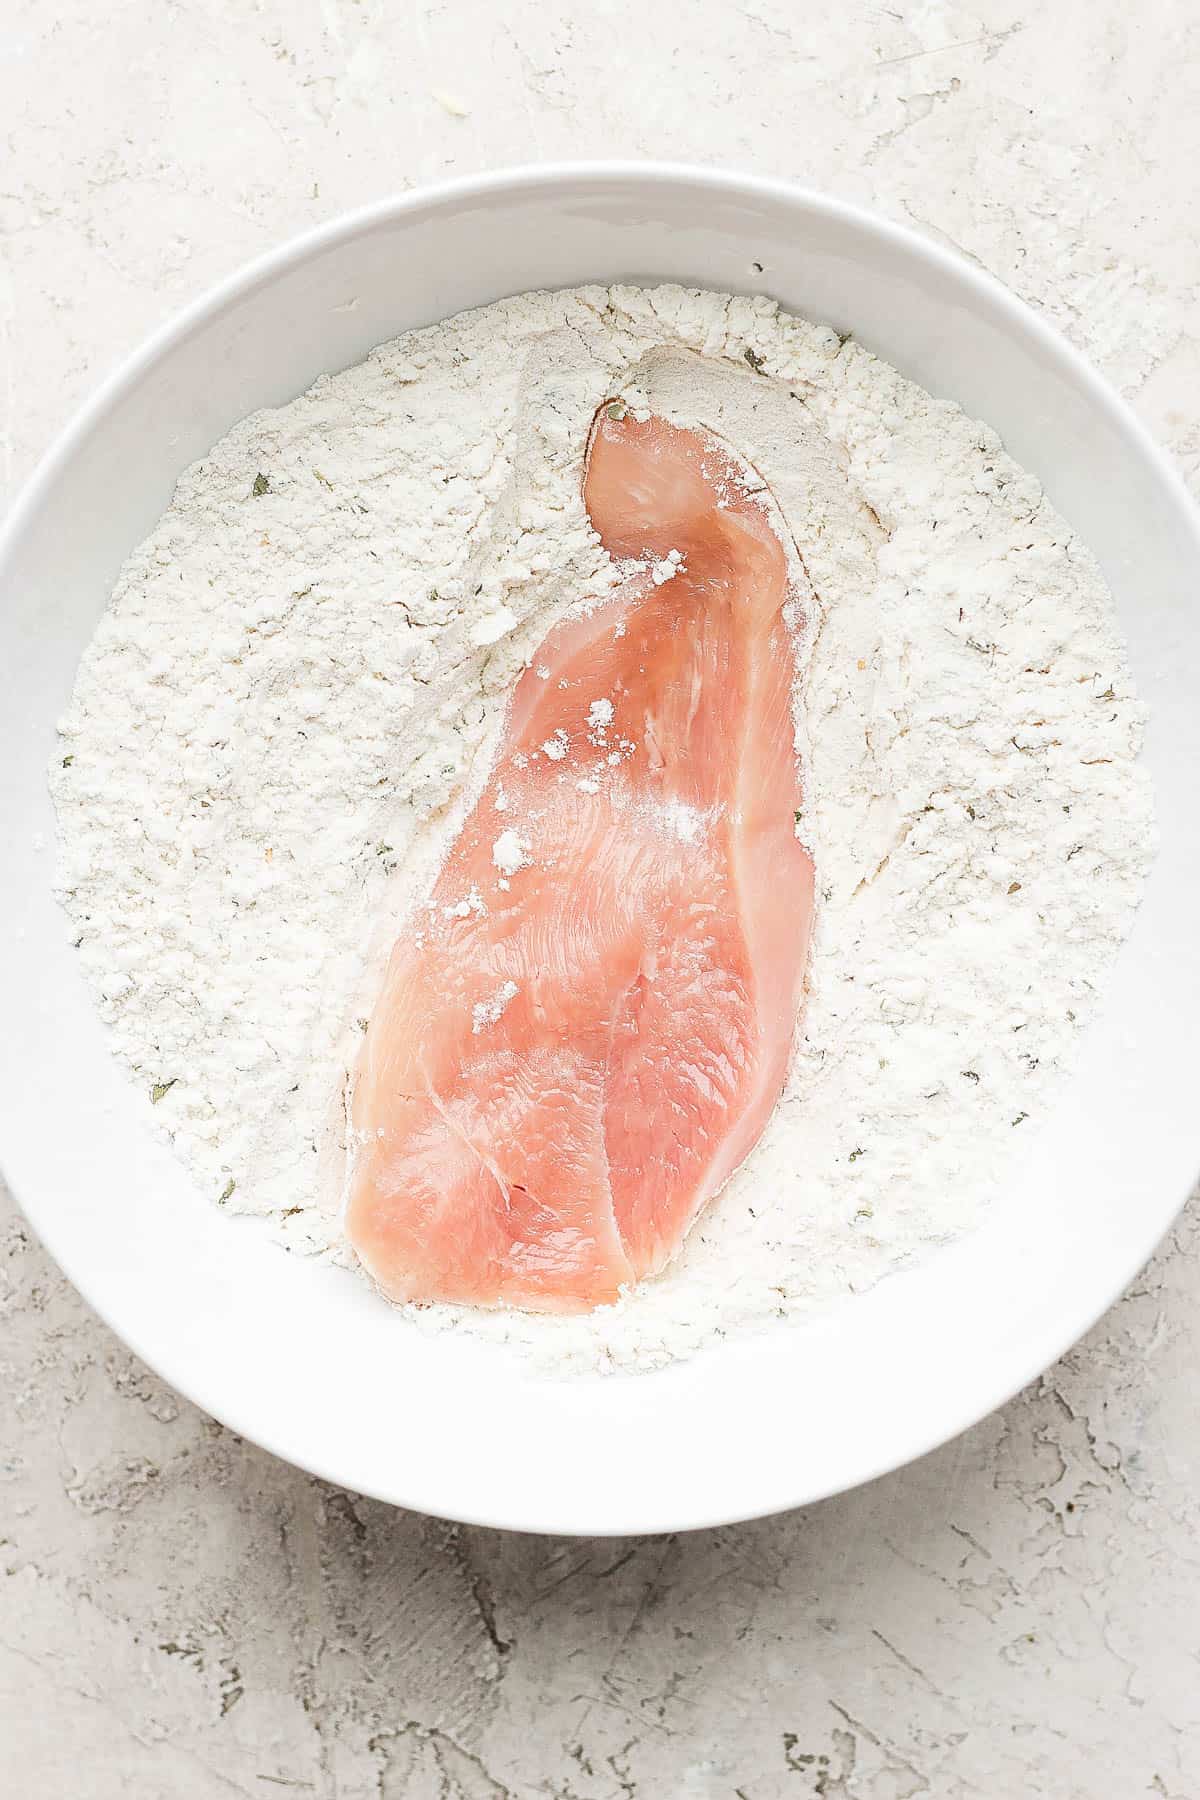 A chicken cutlet in the a white bowl full of flour, garlic powder, onion powder, and Italian seasoning.